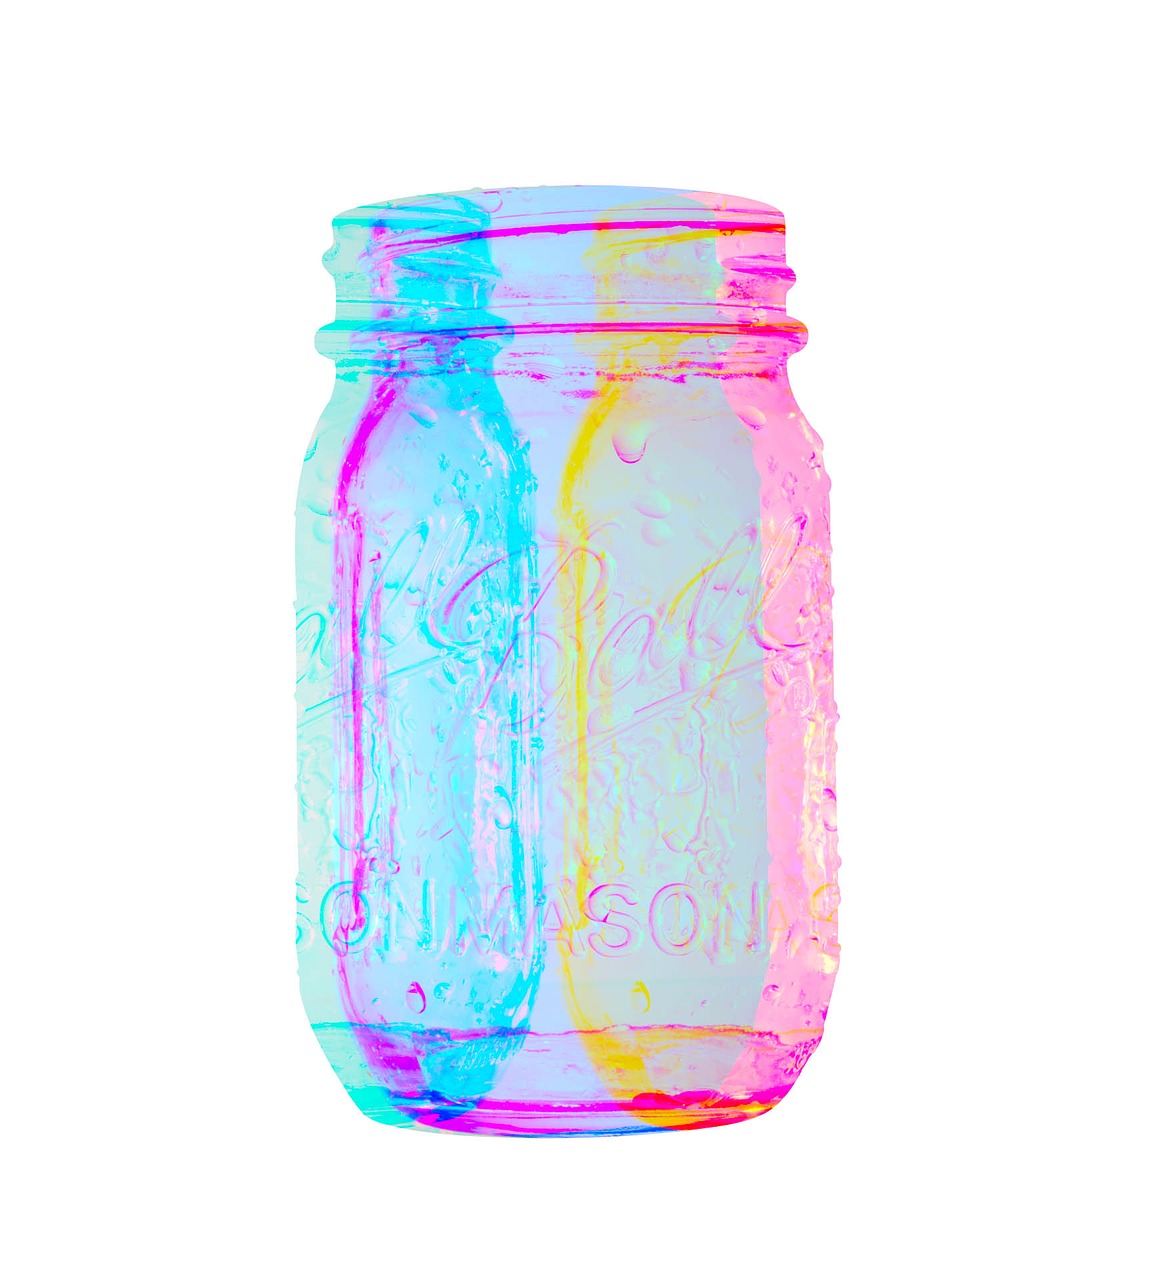 glass jar abstract free photo